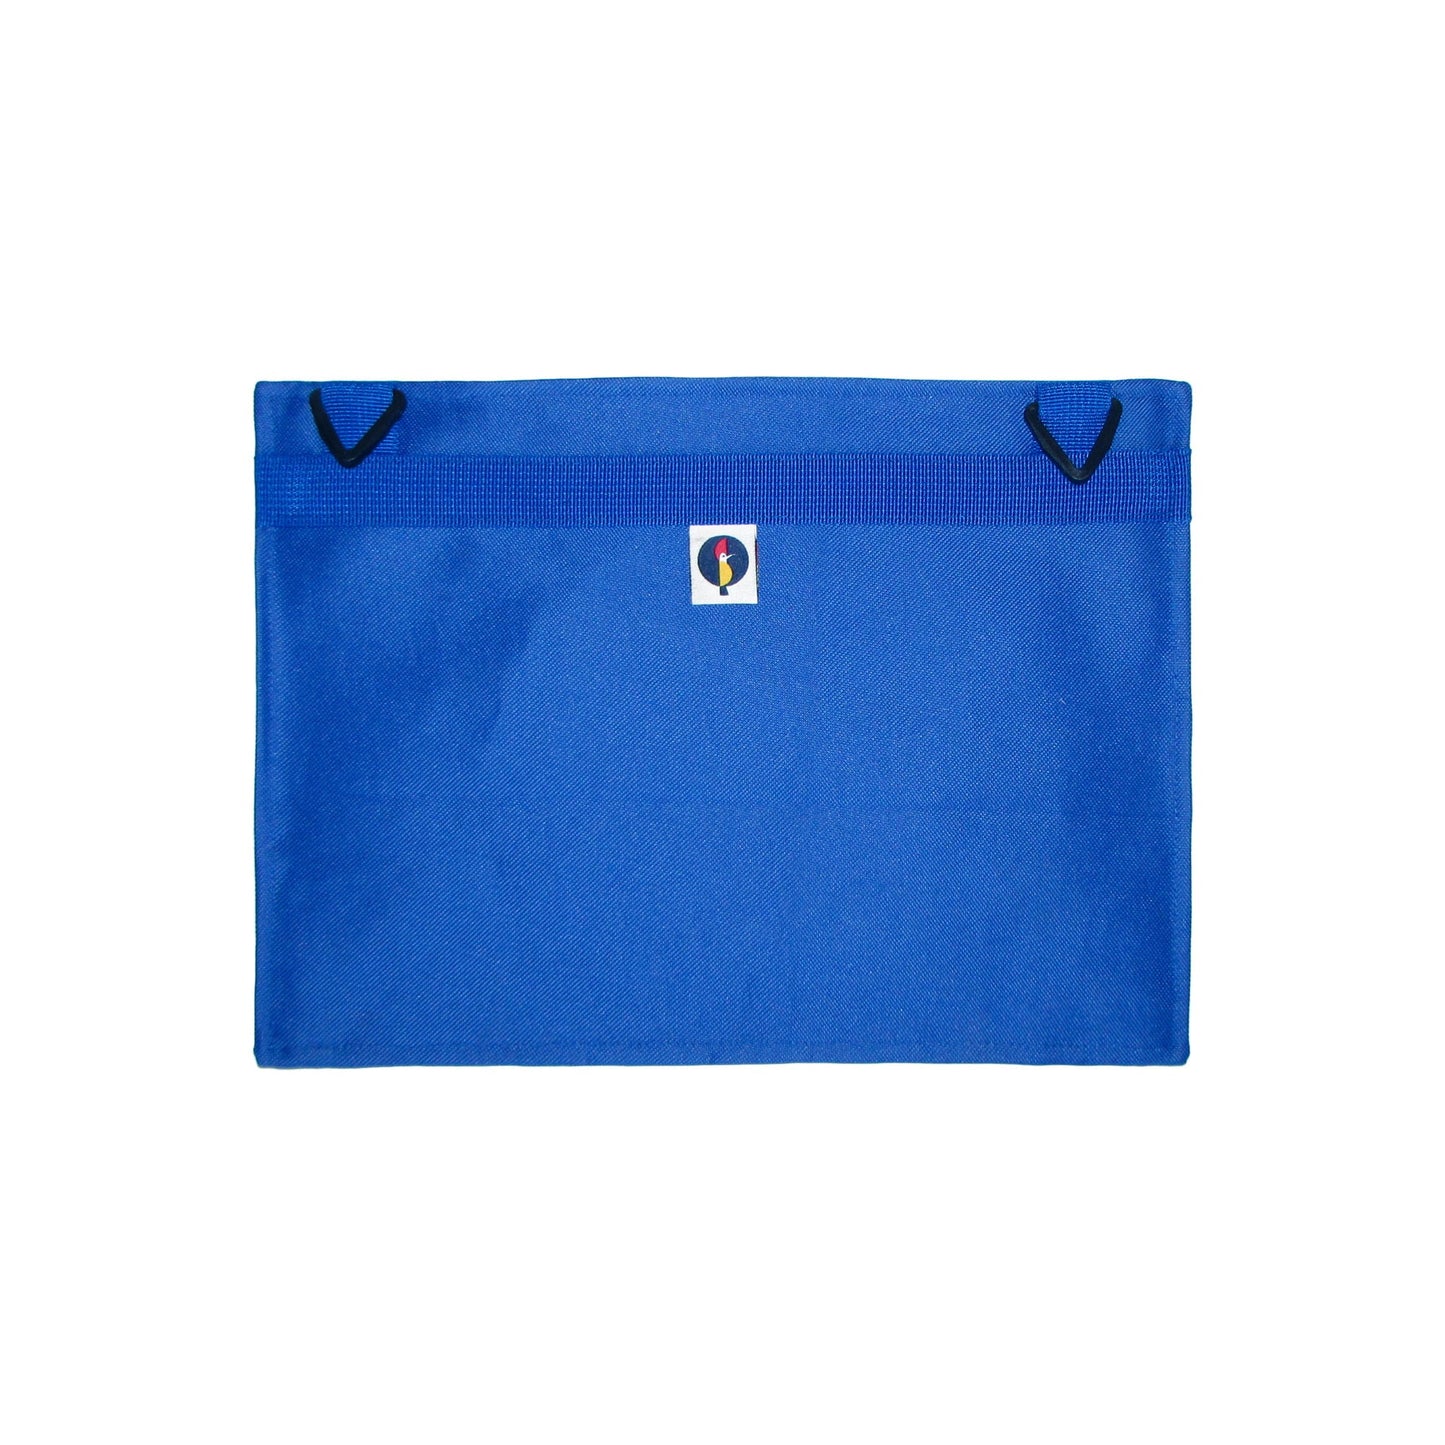 Accessories Envelope Bag Royal Blue - Uriel Studio